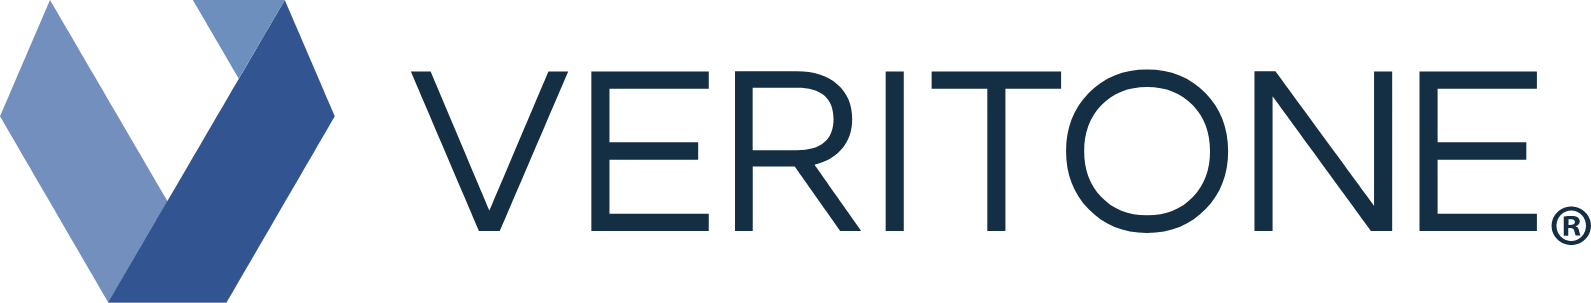 Veritone logo large (transparent PNG)